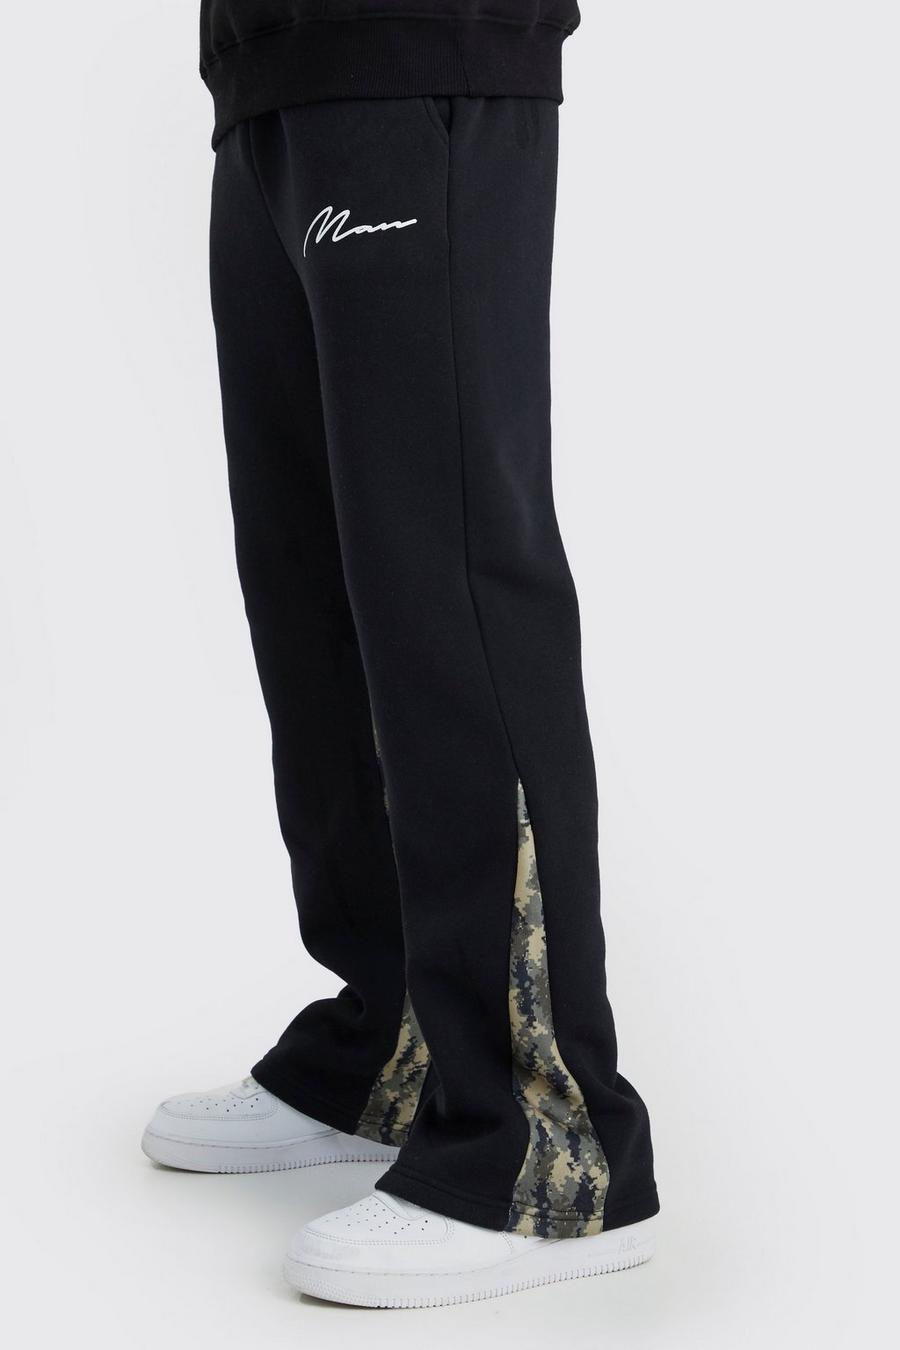 Pantalón deportivo MAN Signature de camuflaje con refuerzos, Black